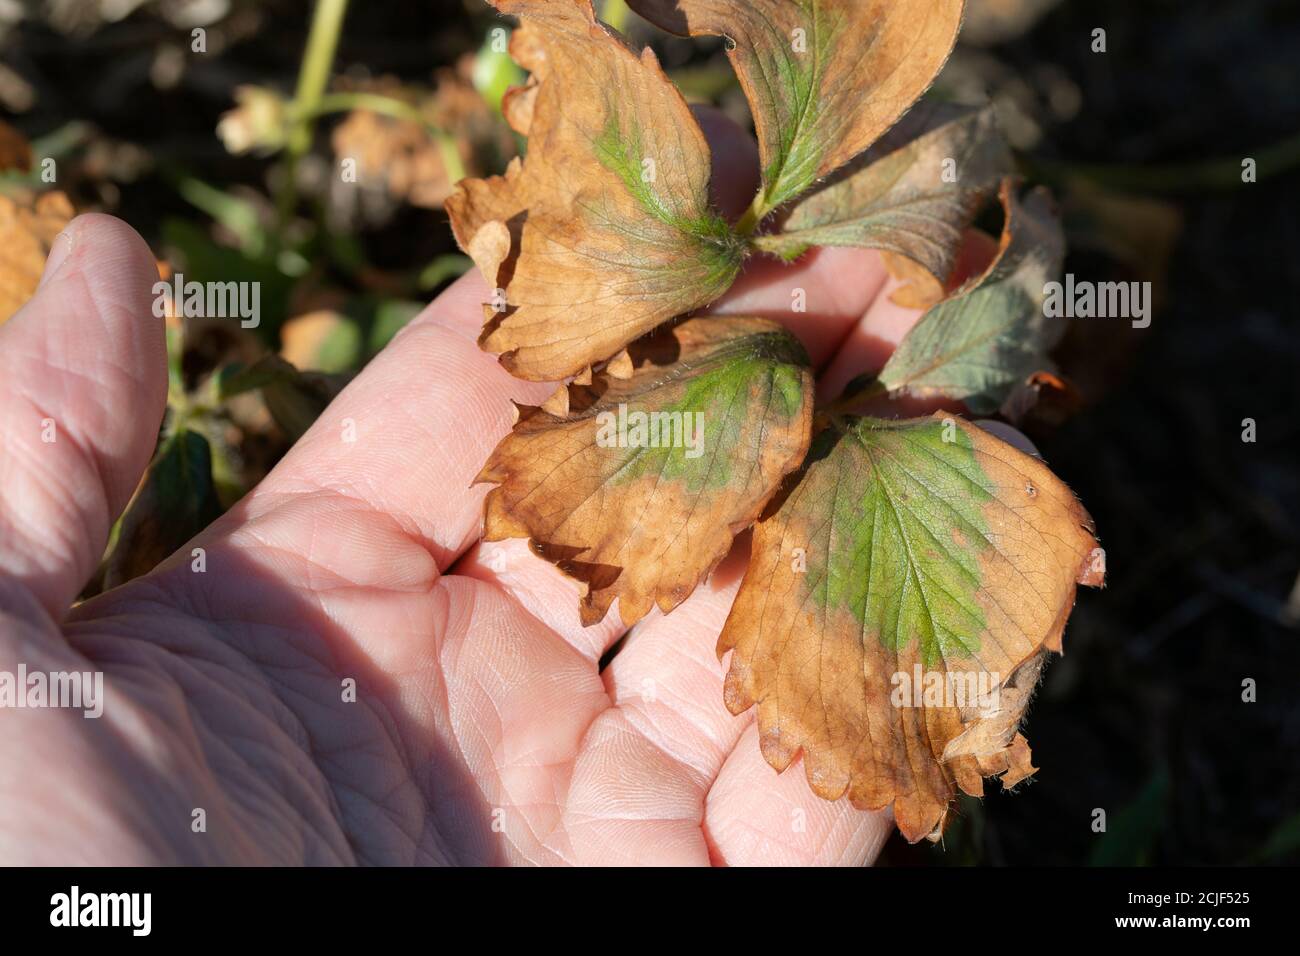 strawberry leaf damage as symptoms of fusarium wilt. Stock Photo